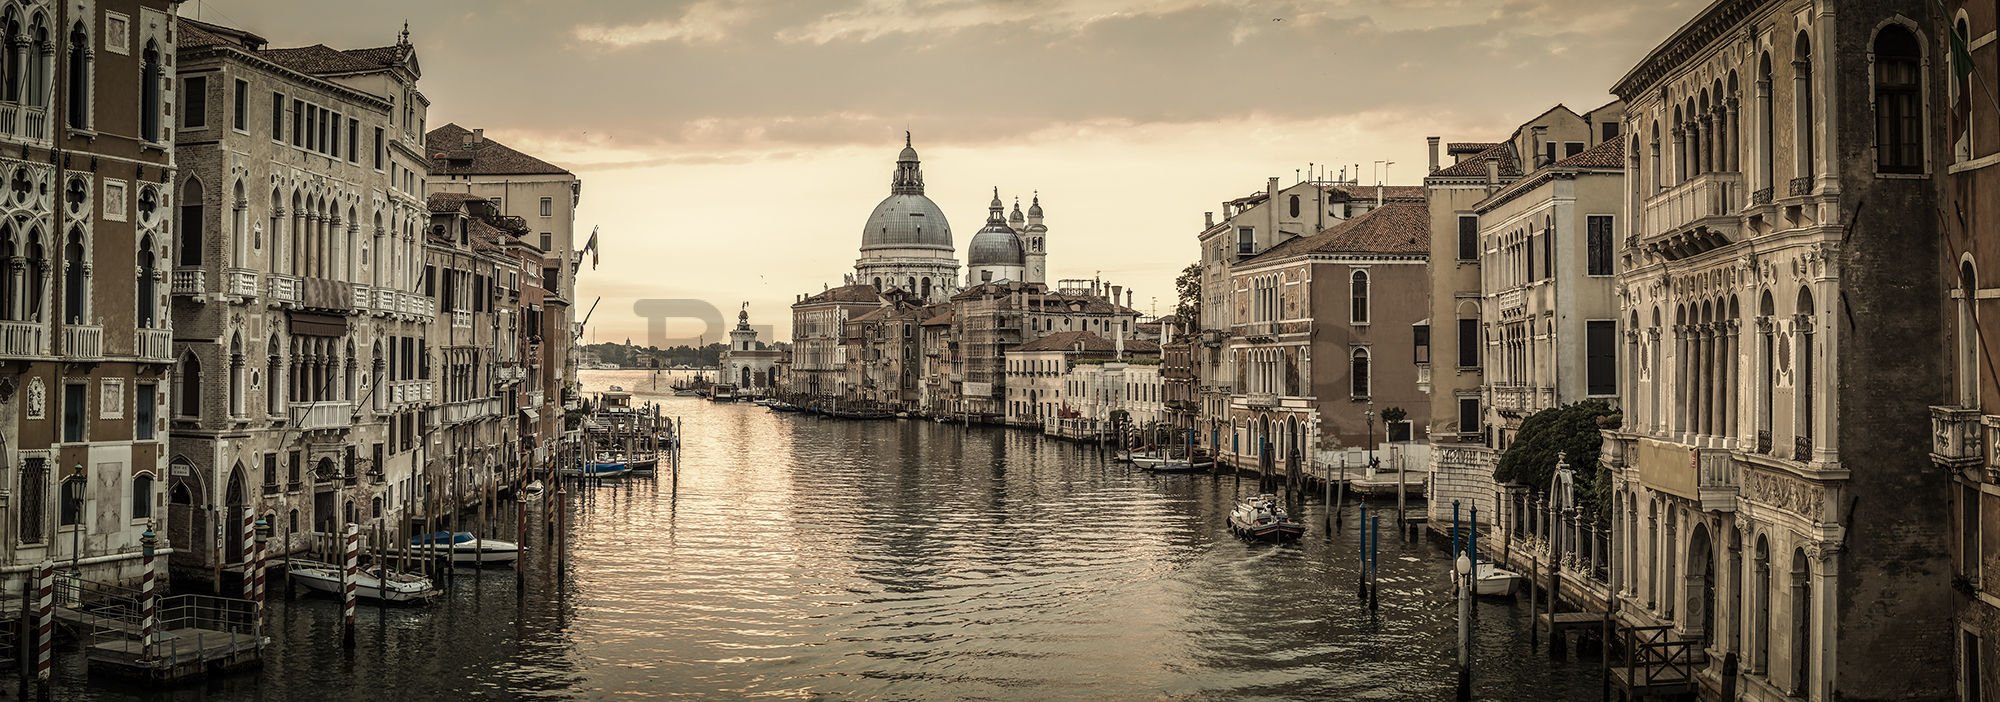 Fototapet: Canalul Veneției - 624x219 cm